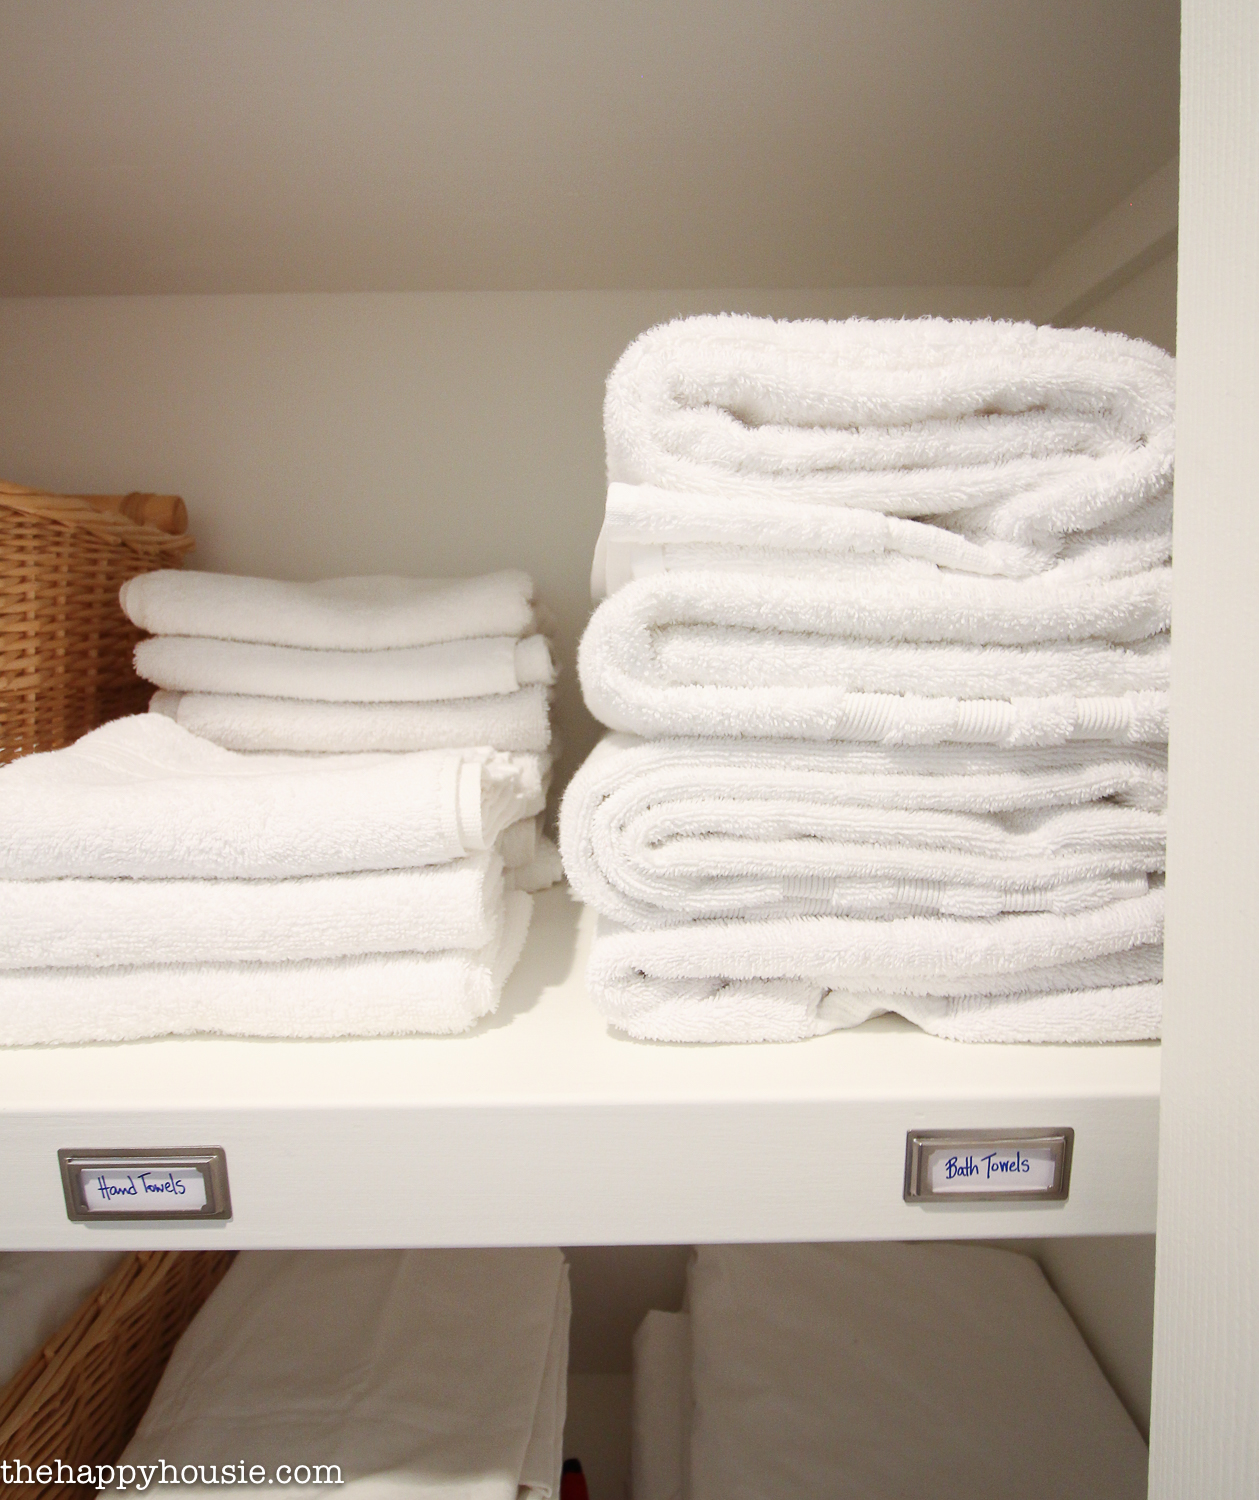 Folded towels on the shelf.